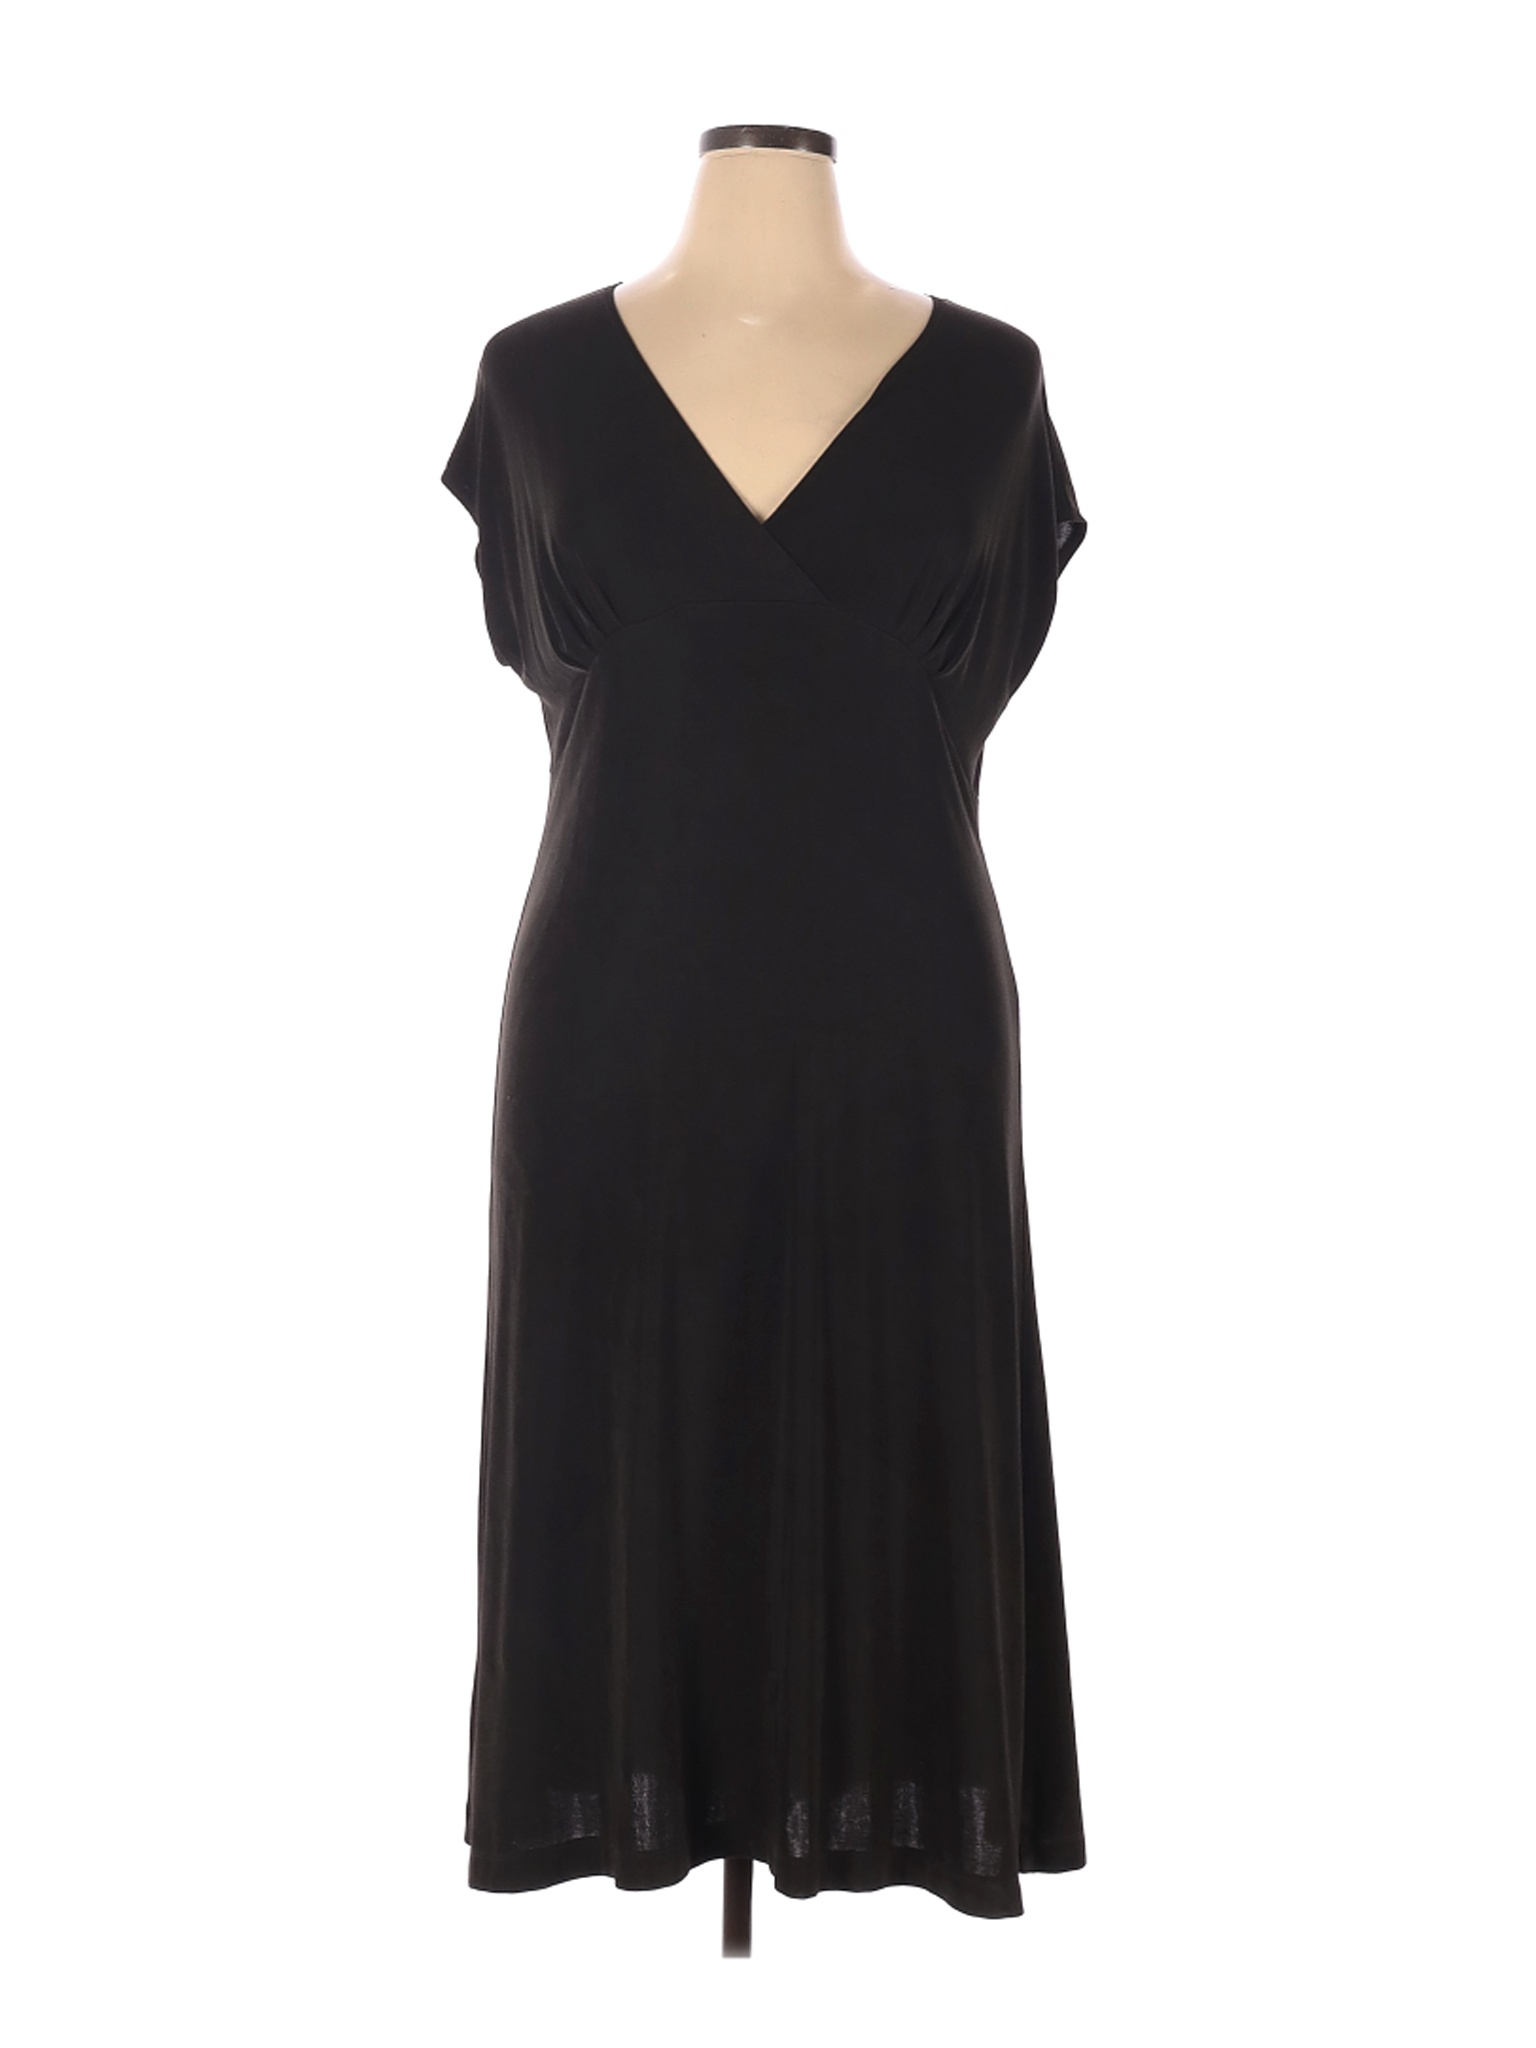 Travelers by Chico's Women Black Casual Dress XL | eBay